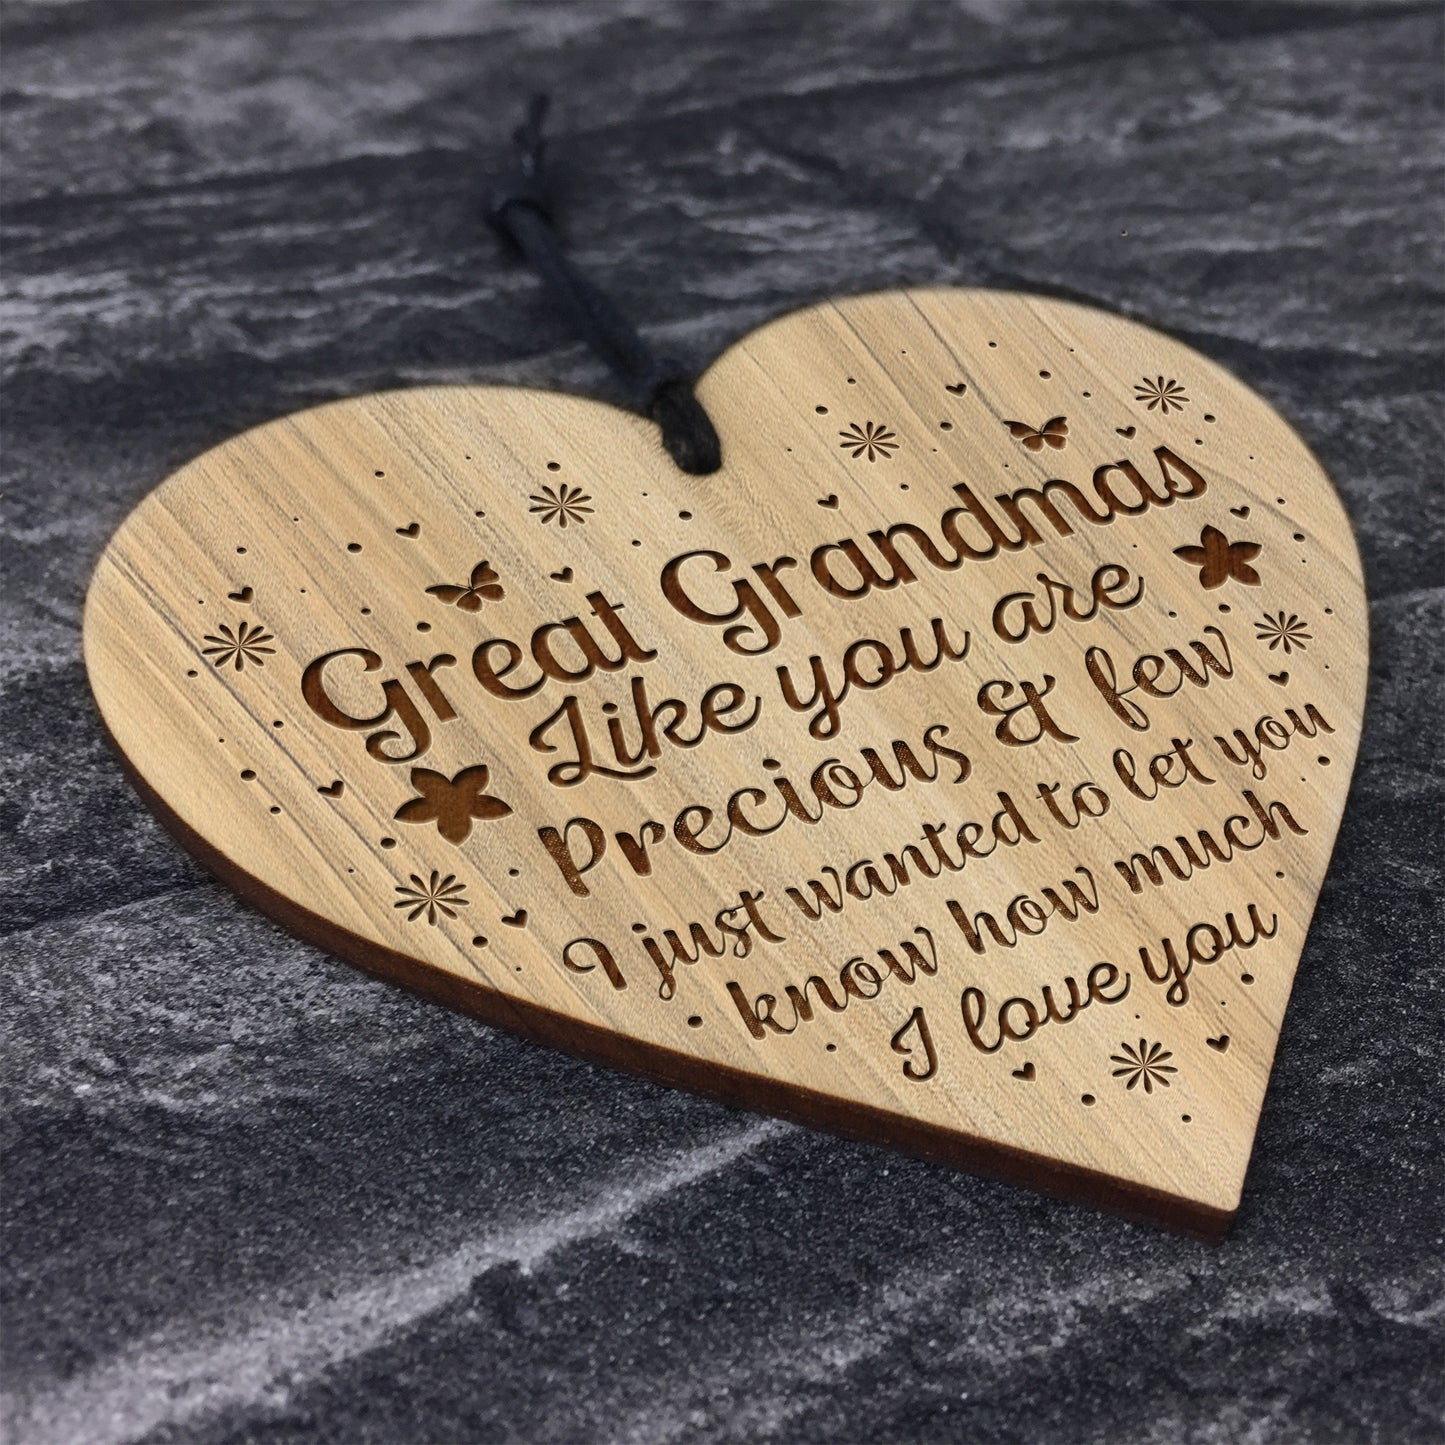 Great Grandma Engraved Heart Birthday Christmas Gift For Grandma